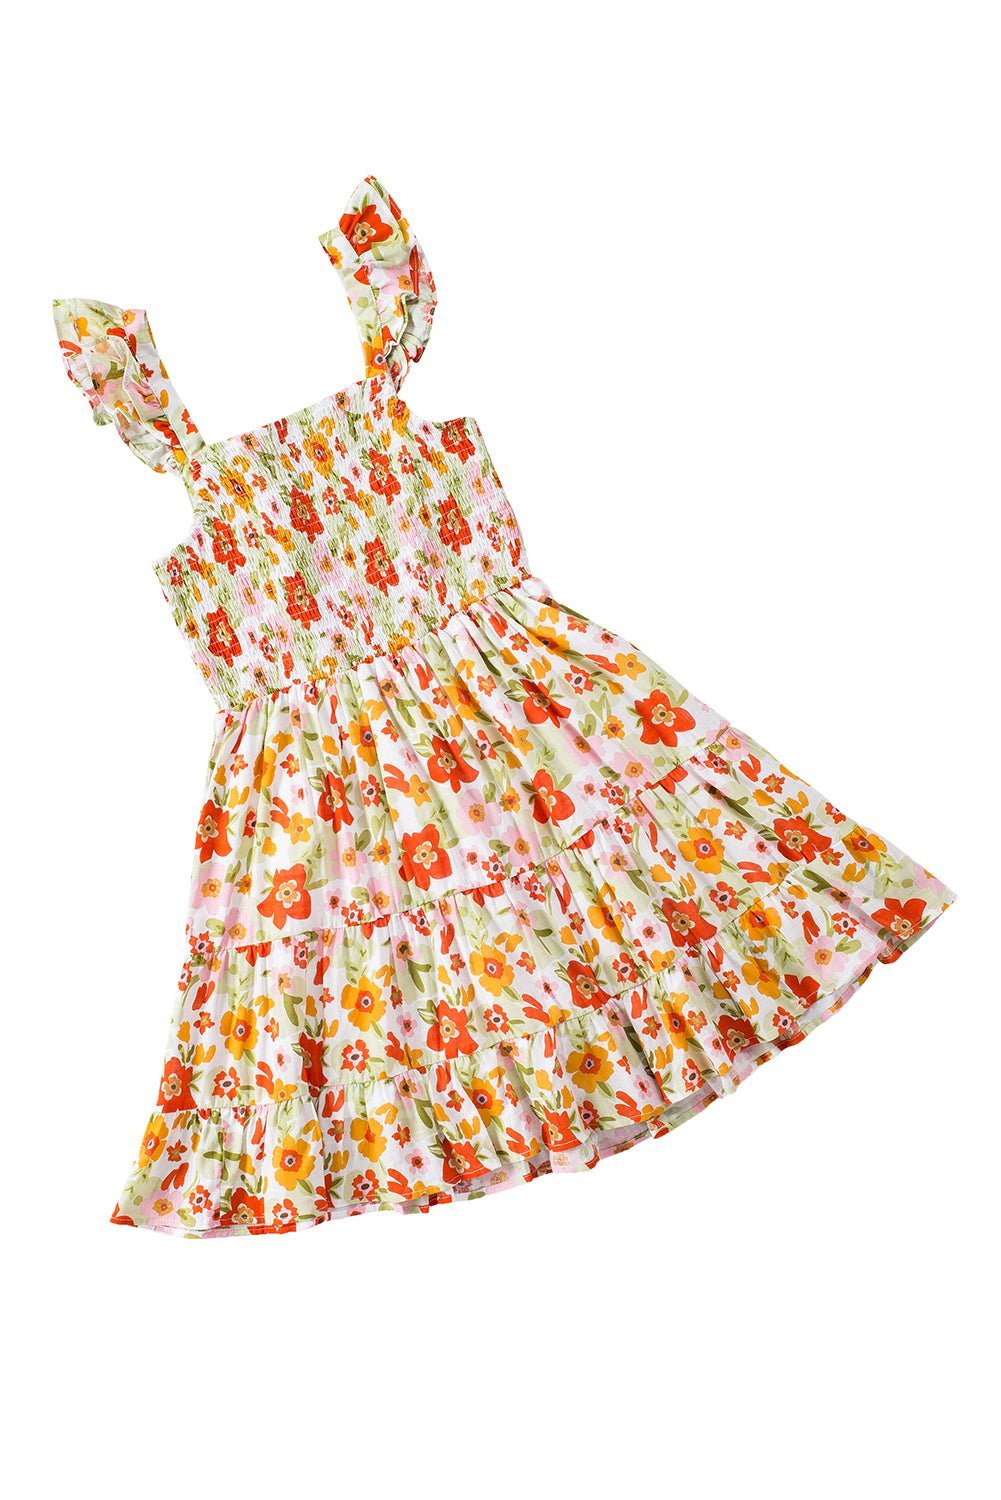 Fashionsarah.com Ruffled Sleeveless High Rise Floral Mini Dress